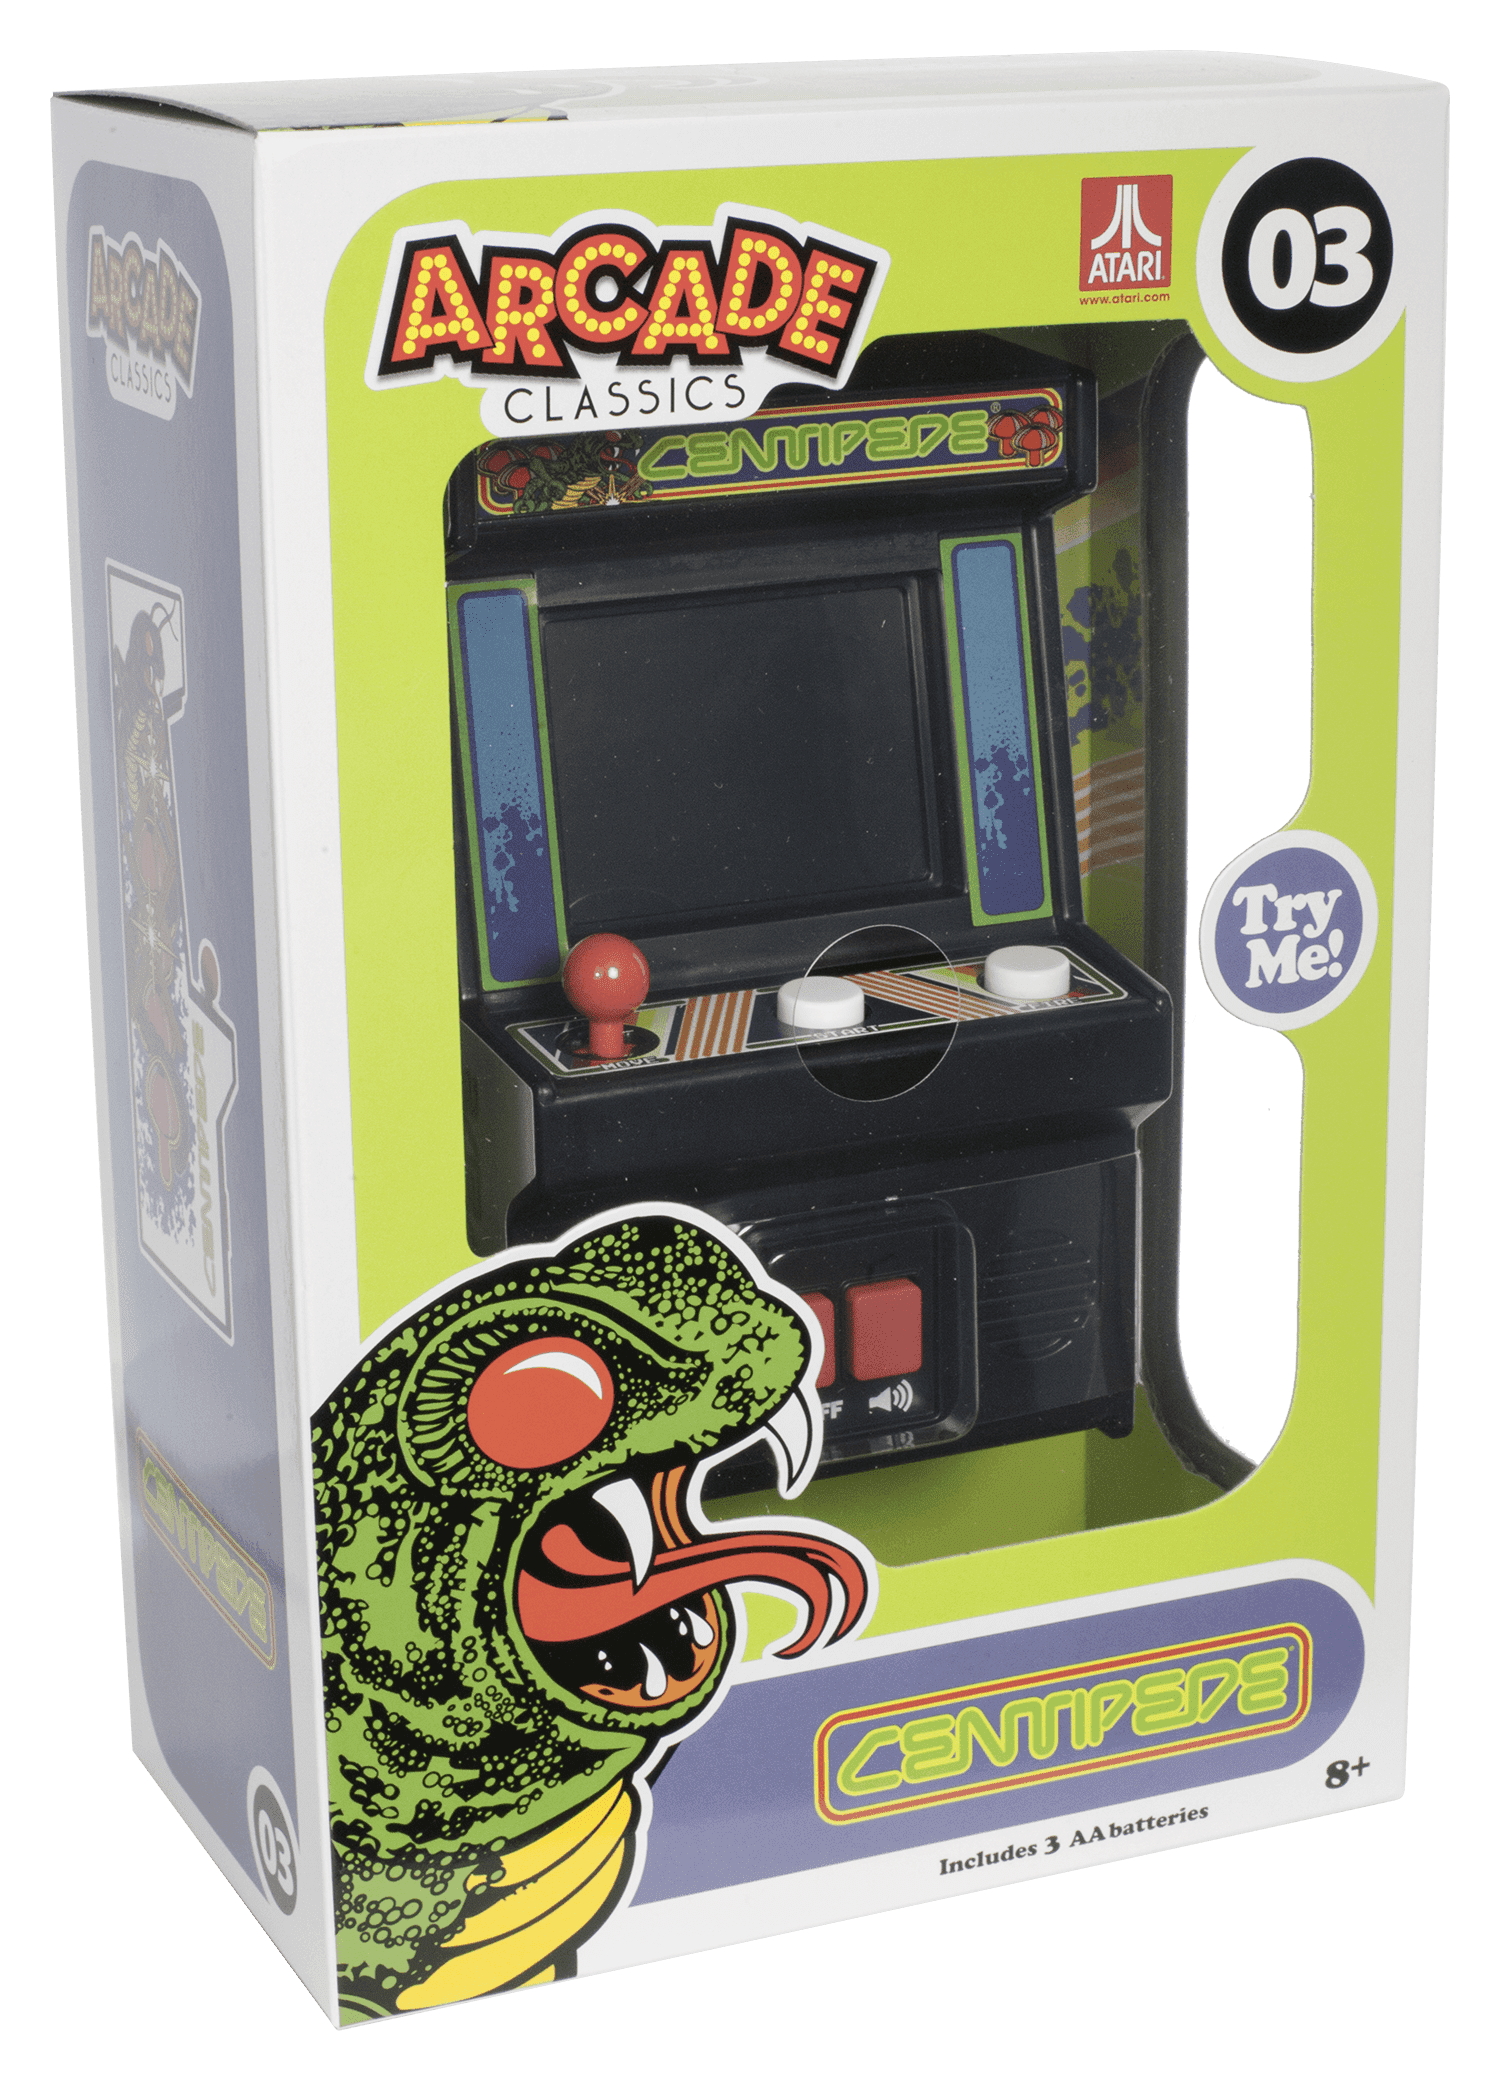 Centipede Arcade Game